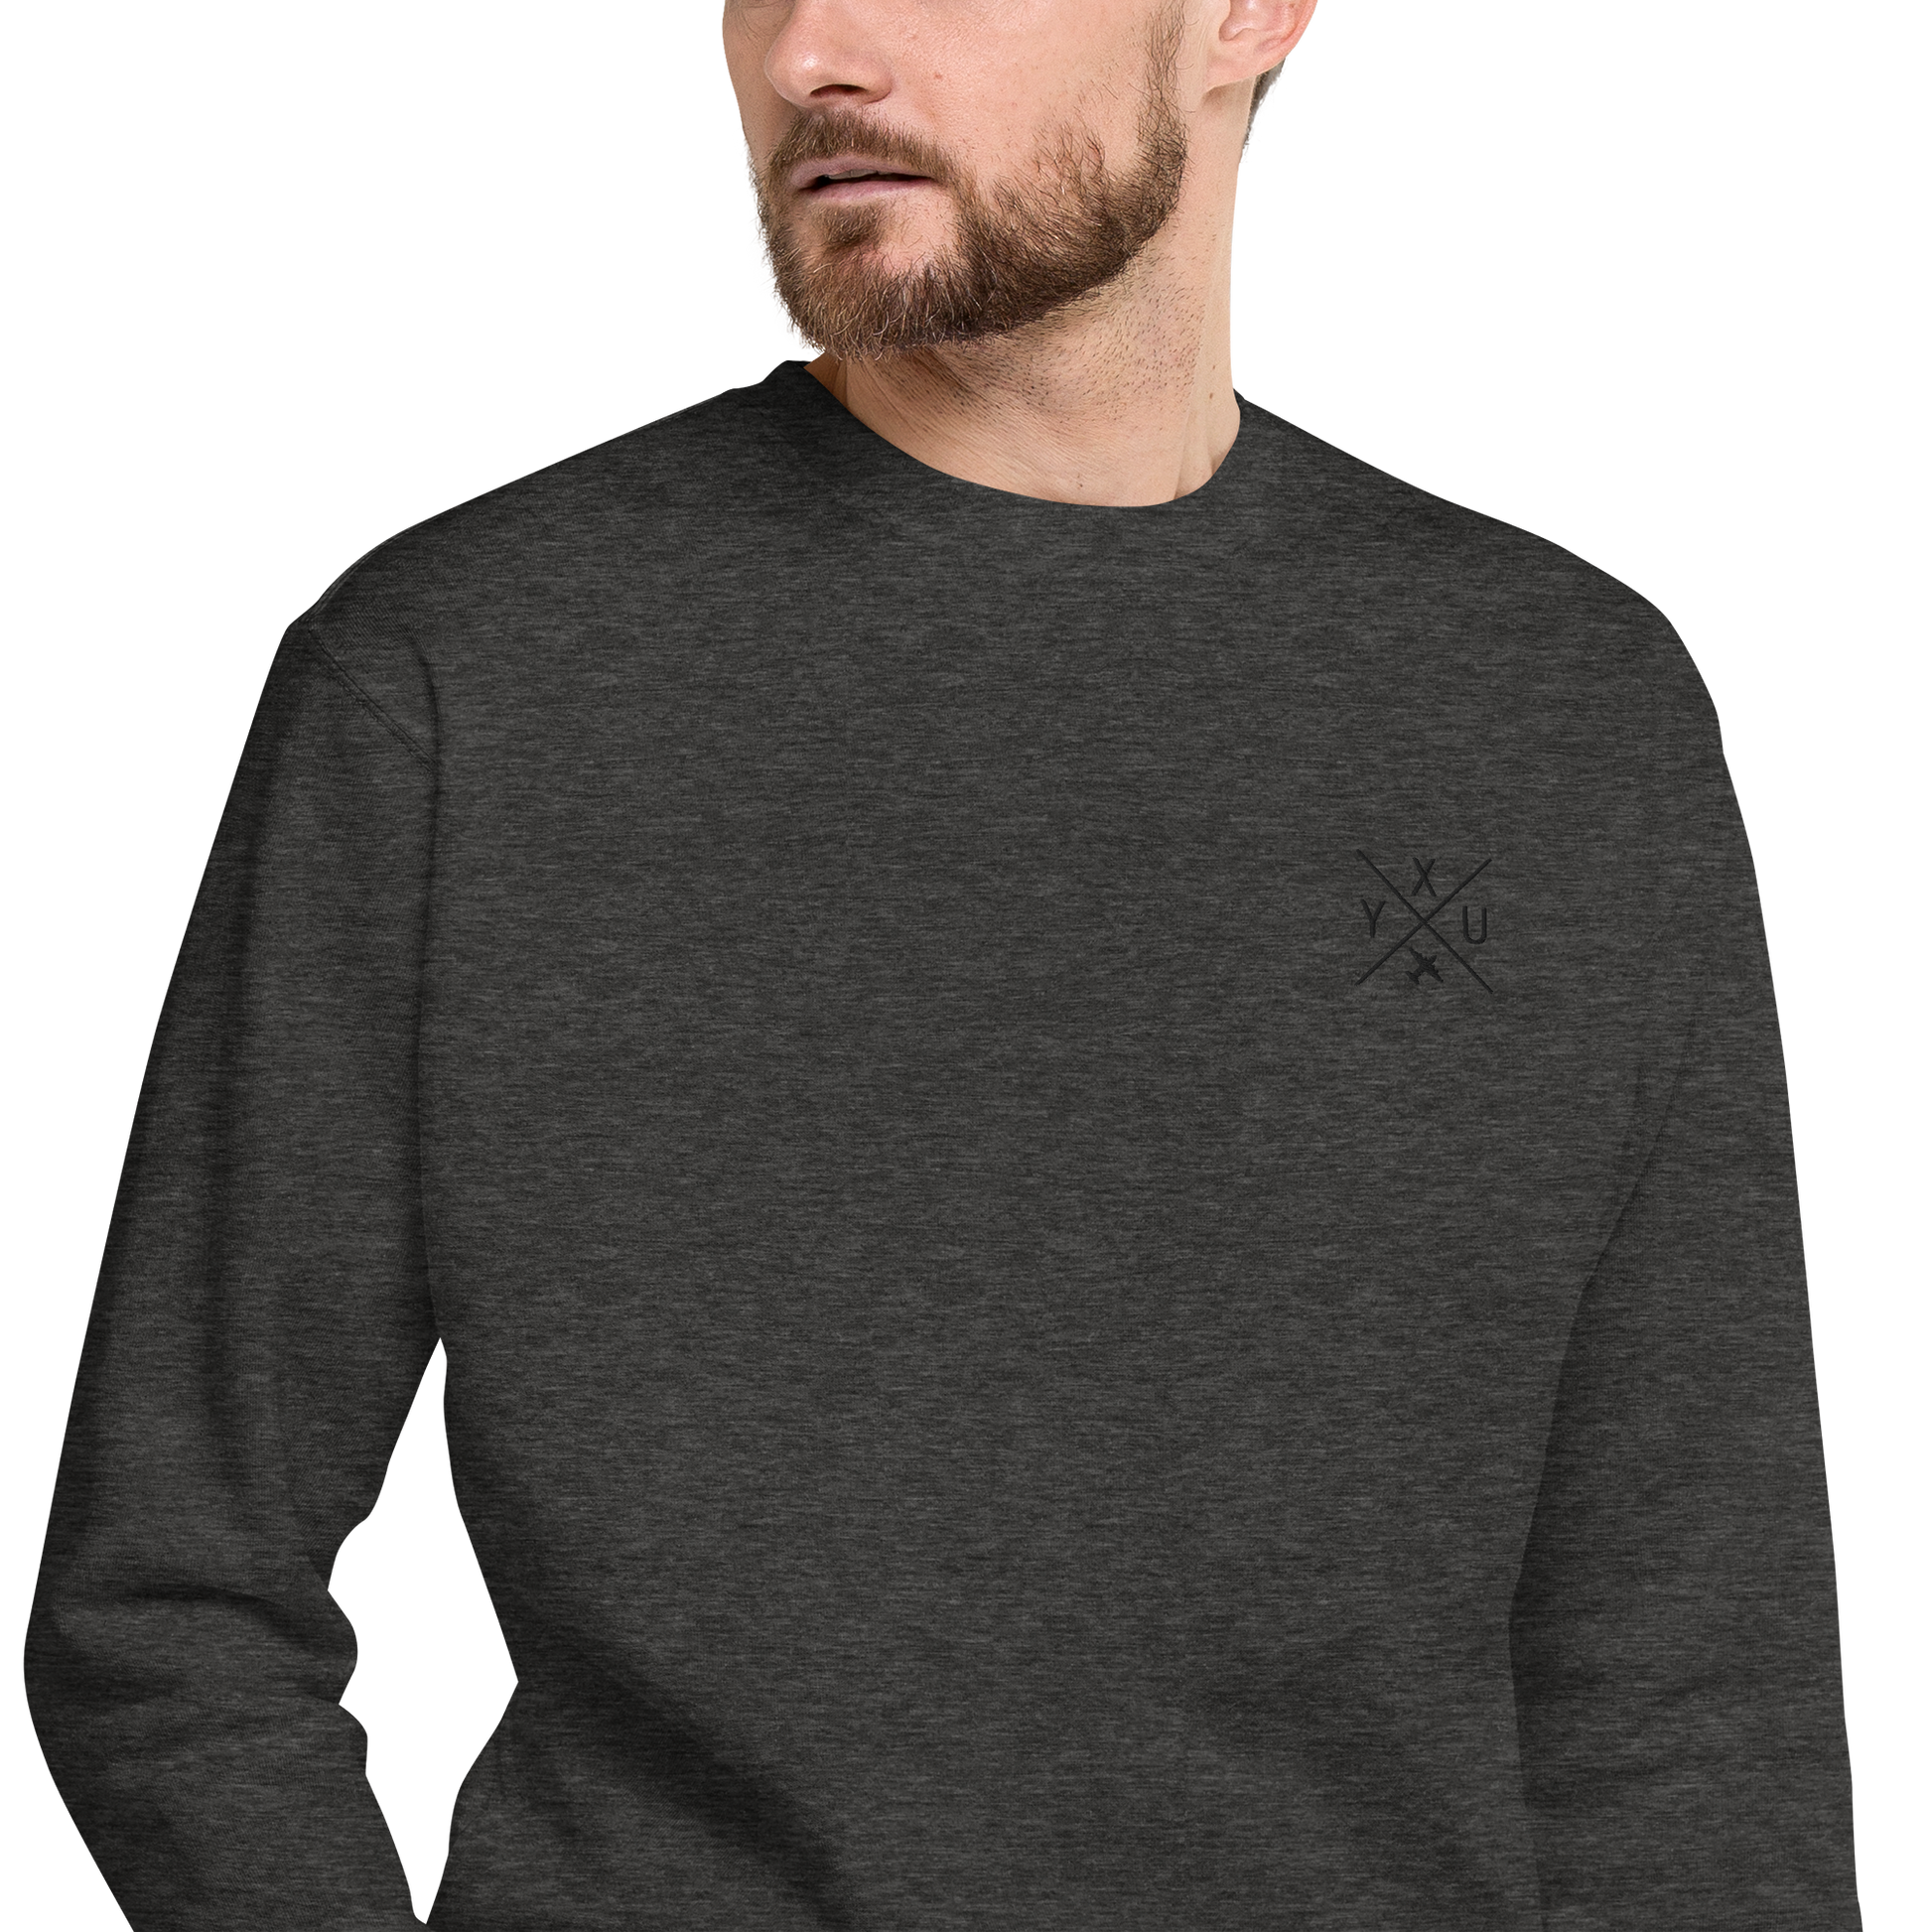 YHM Designs - YXU London Premium Sweatshirt - Crossed-X Design with Airport Code and Vintage Propliner - Black Embroidery - Image 07